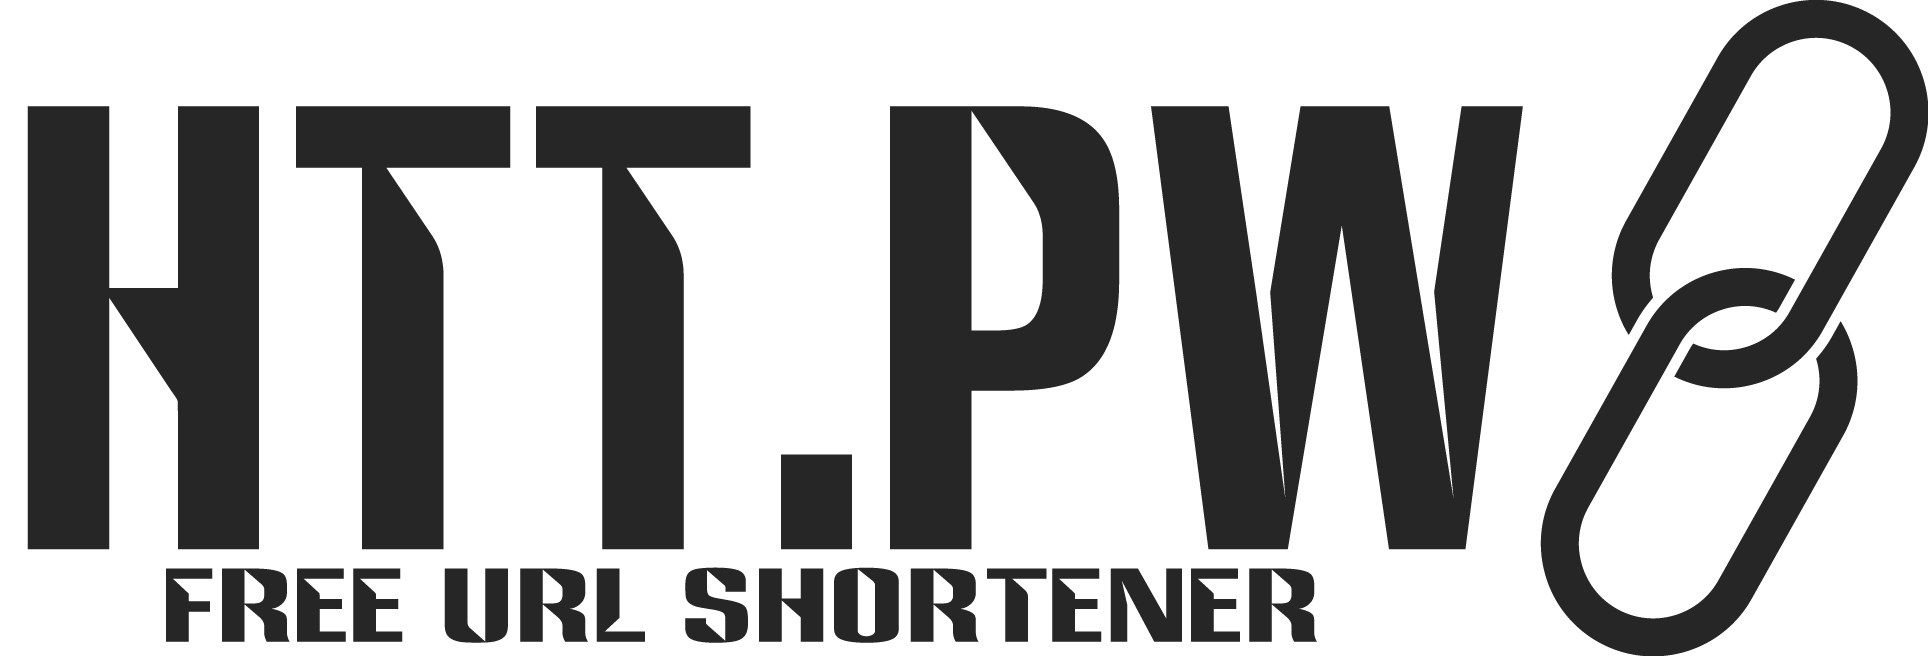 Free URL Shortener By unknowndevice64 - htt.pw Logo